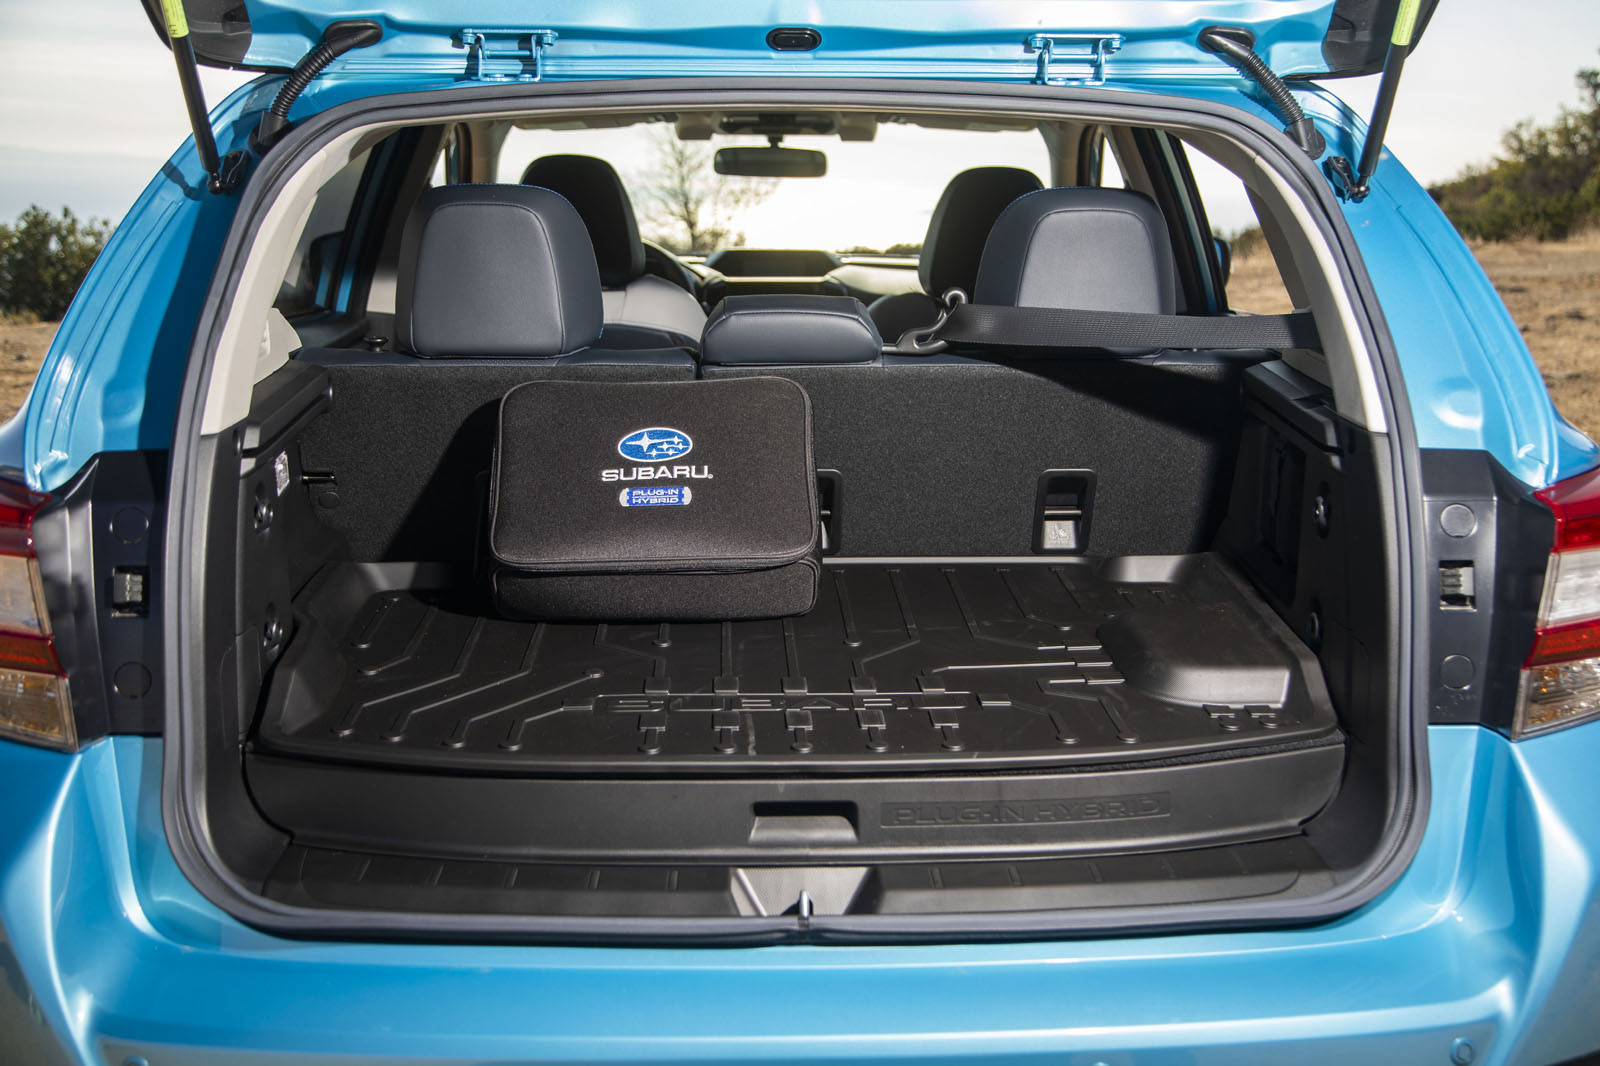 Subaru-Crosstrek-Hybrid-2019-ung-dung-cong-nghe-xe-xanh-cua-Toyota-anh-12